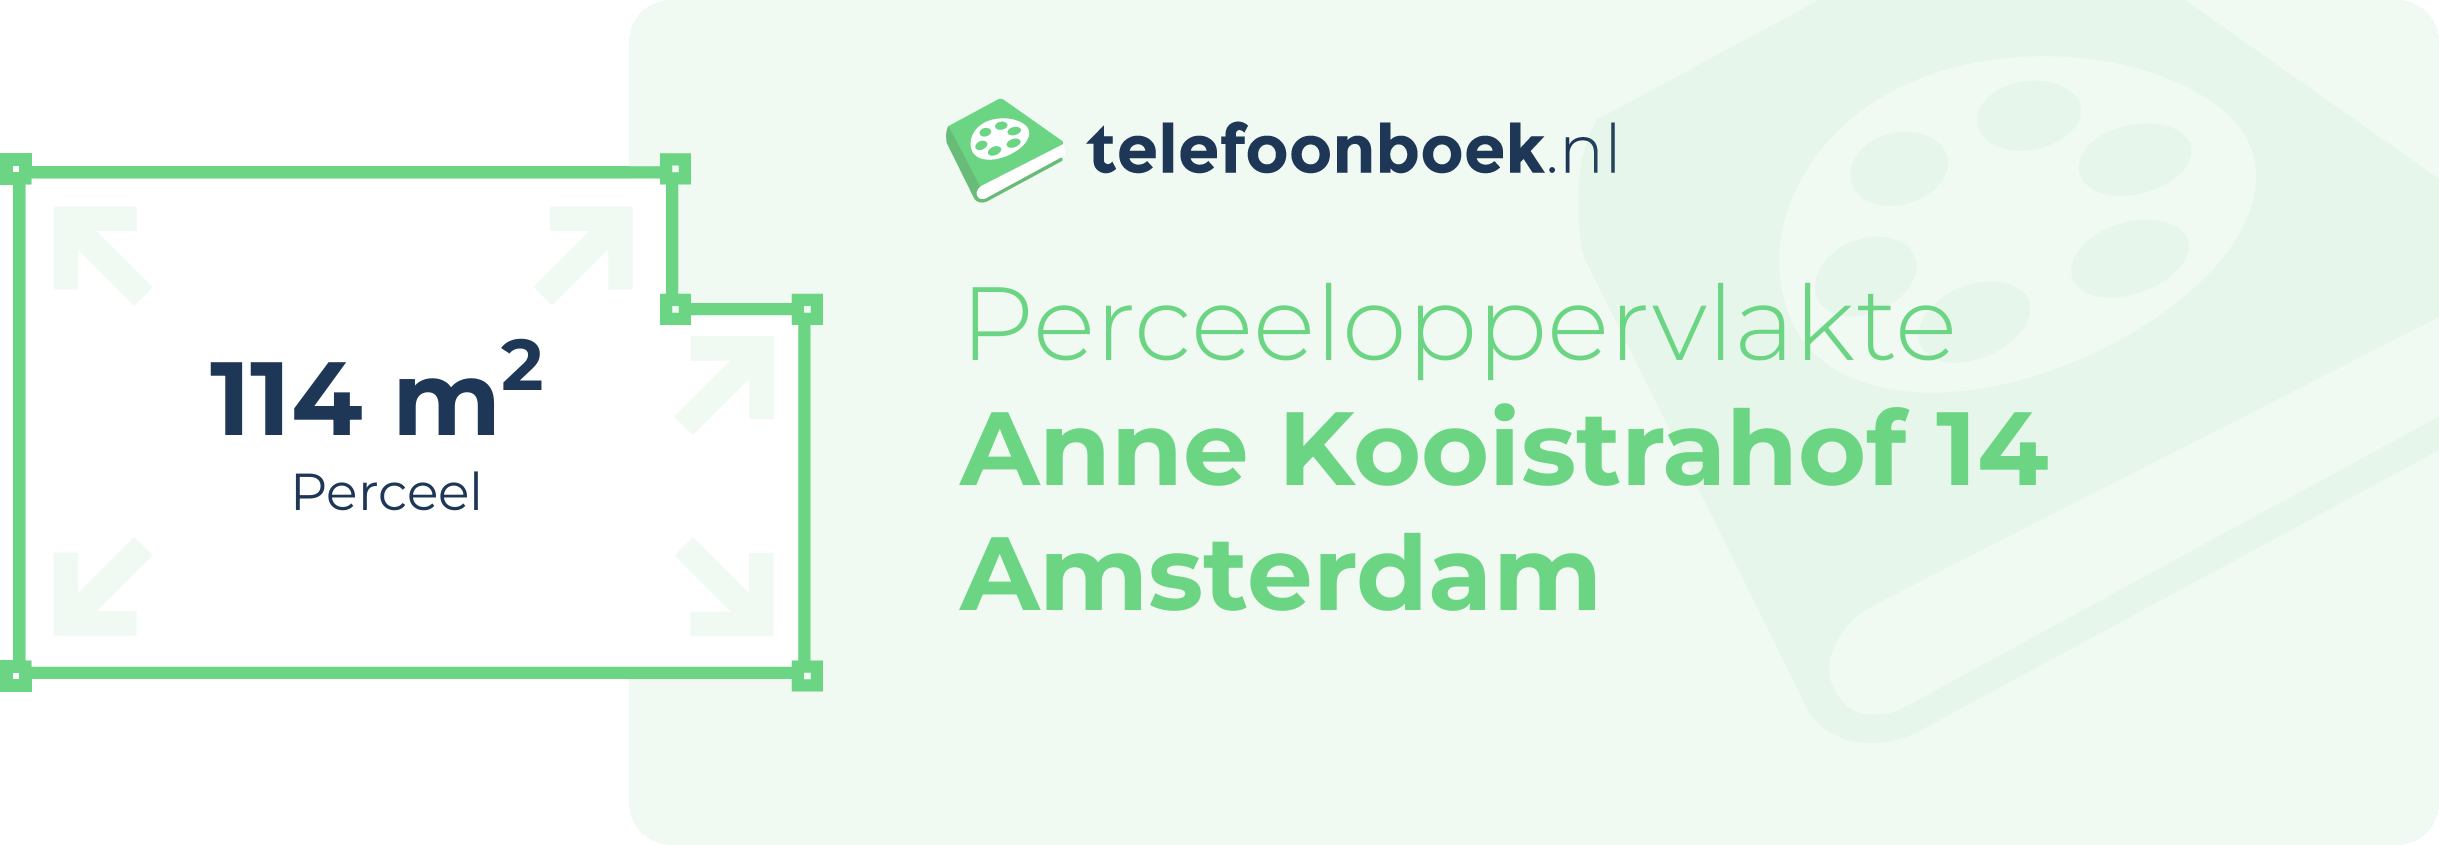 Perceeloppervlakte Anne Kooistrahof 14 Amsterdam